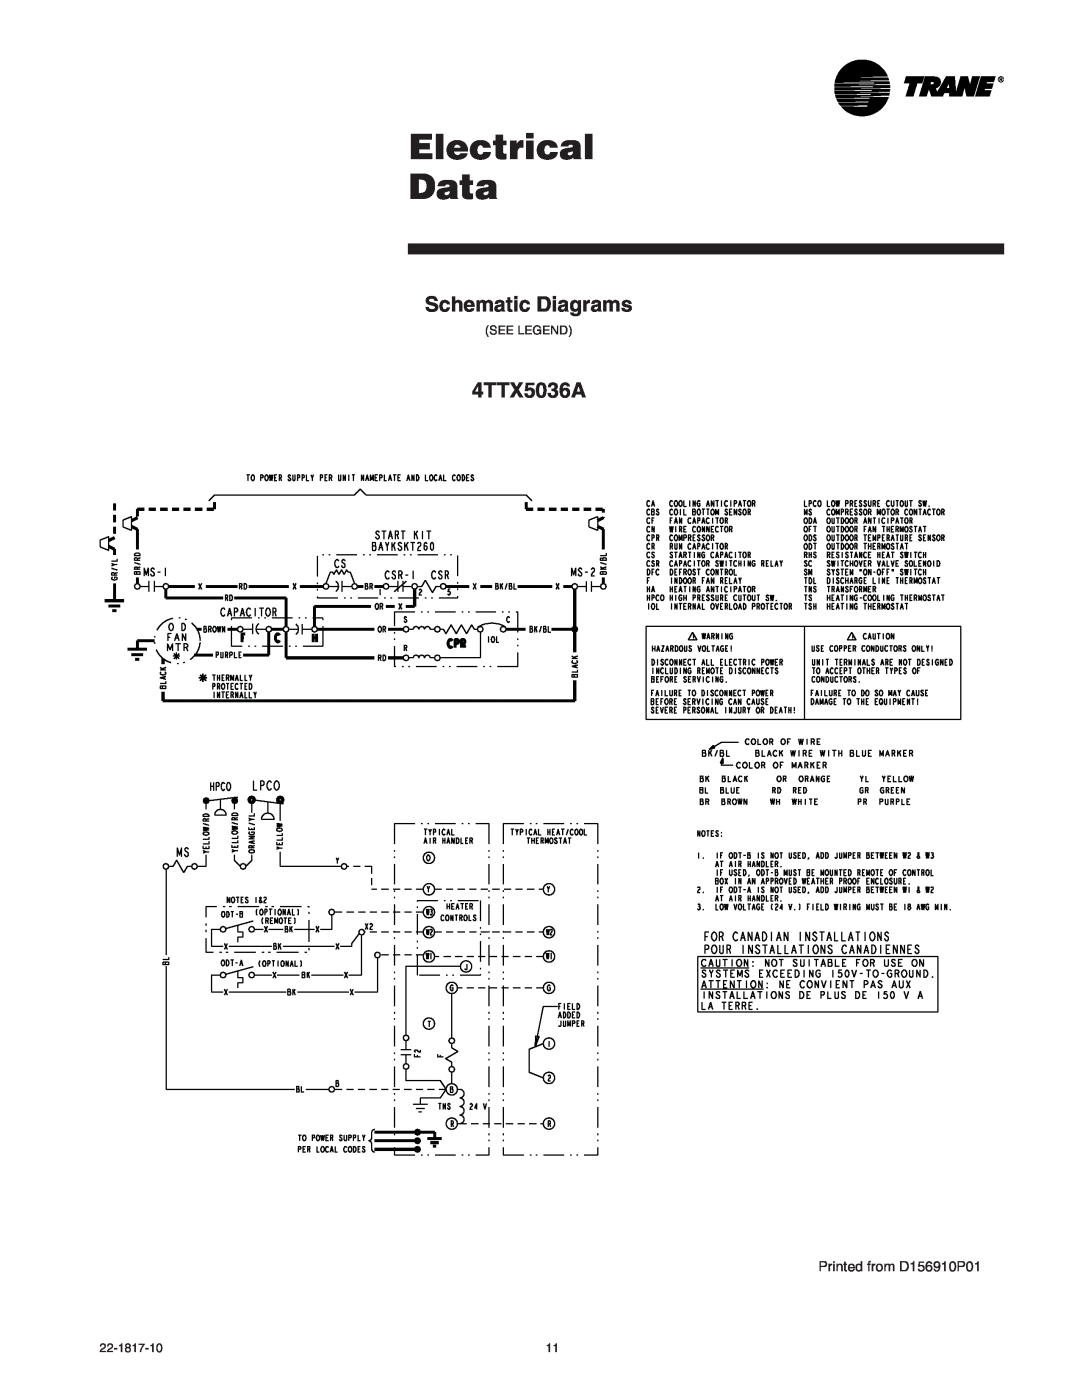 Trane 4TTX5061E, 4TTX5060A1, 4TTX5036A1, 4TTX5042A1, 049E Electrical Data, Schematic Diagrams, Printed from D156910P01 